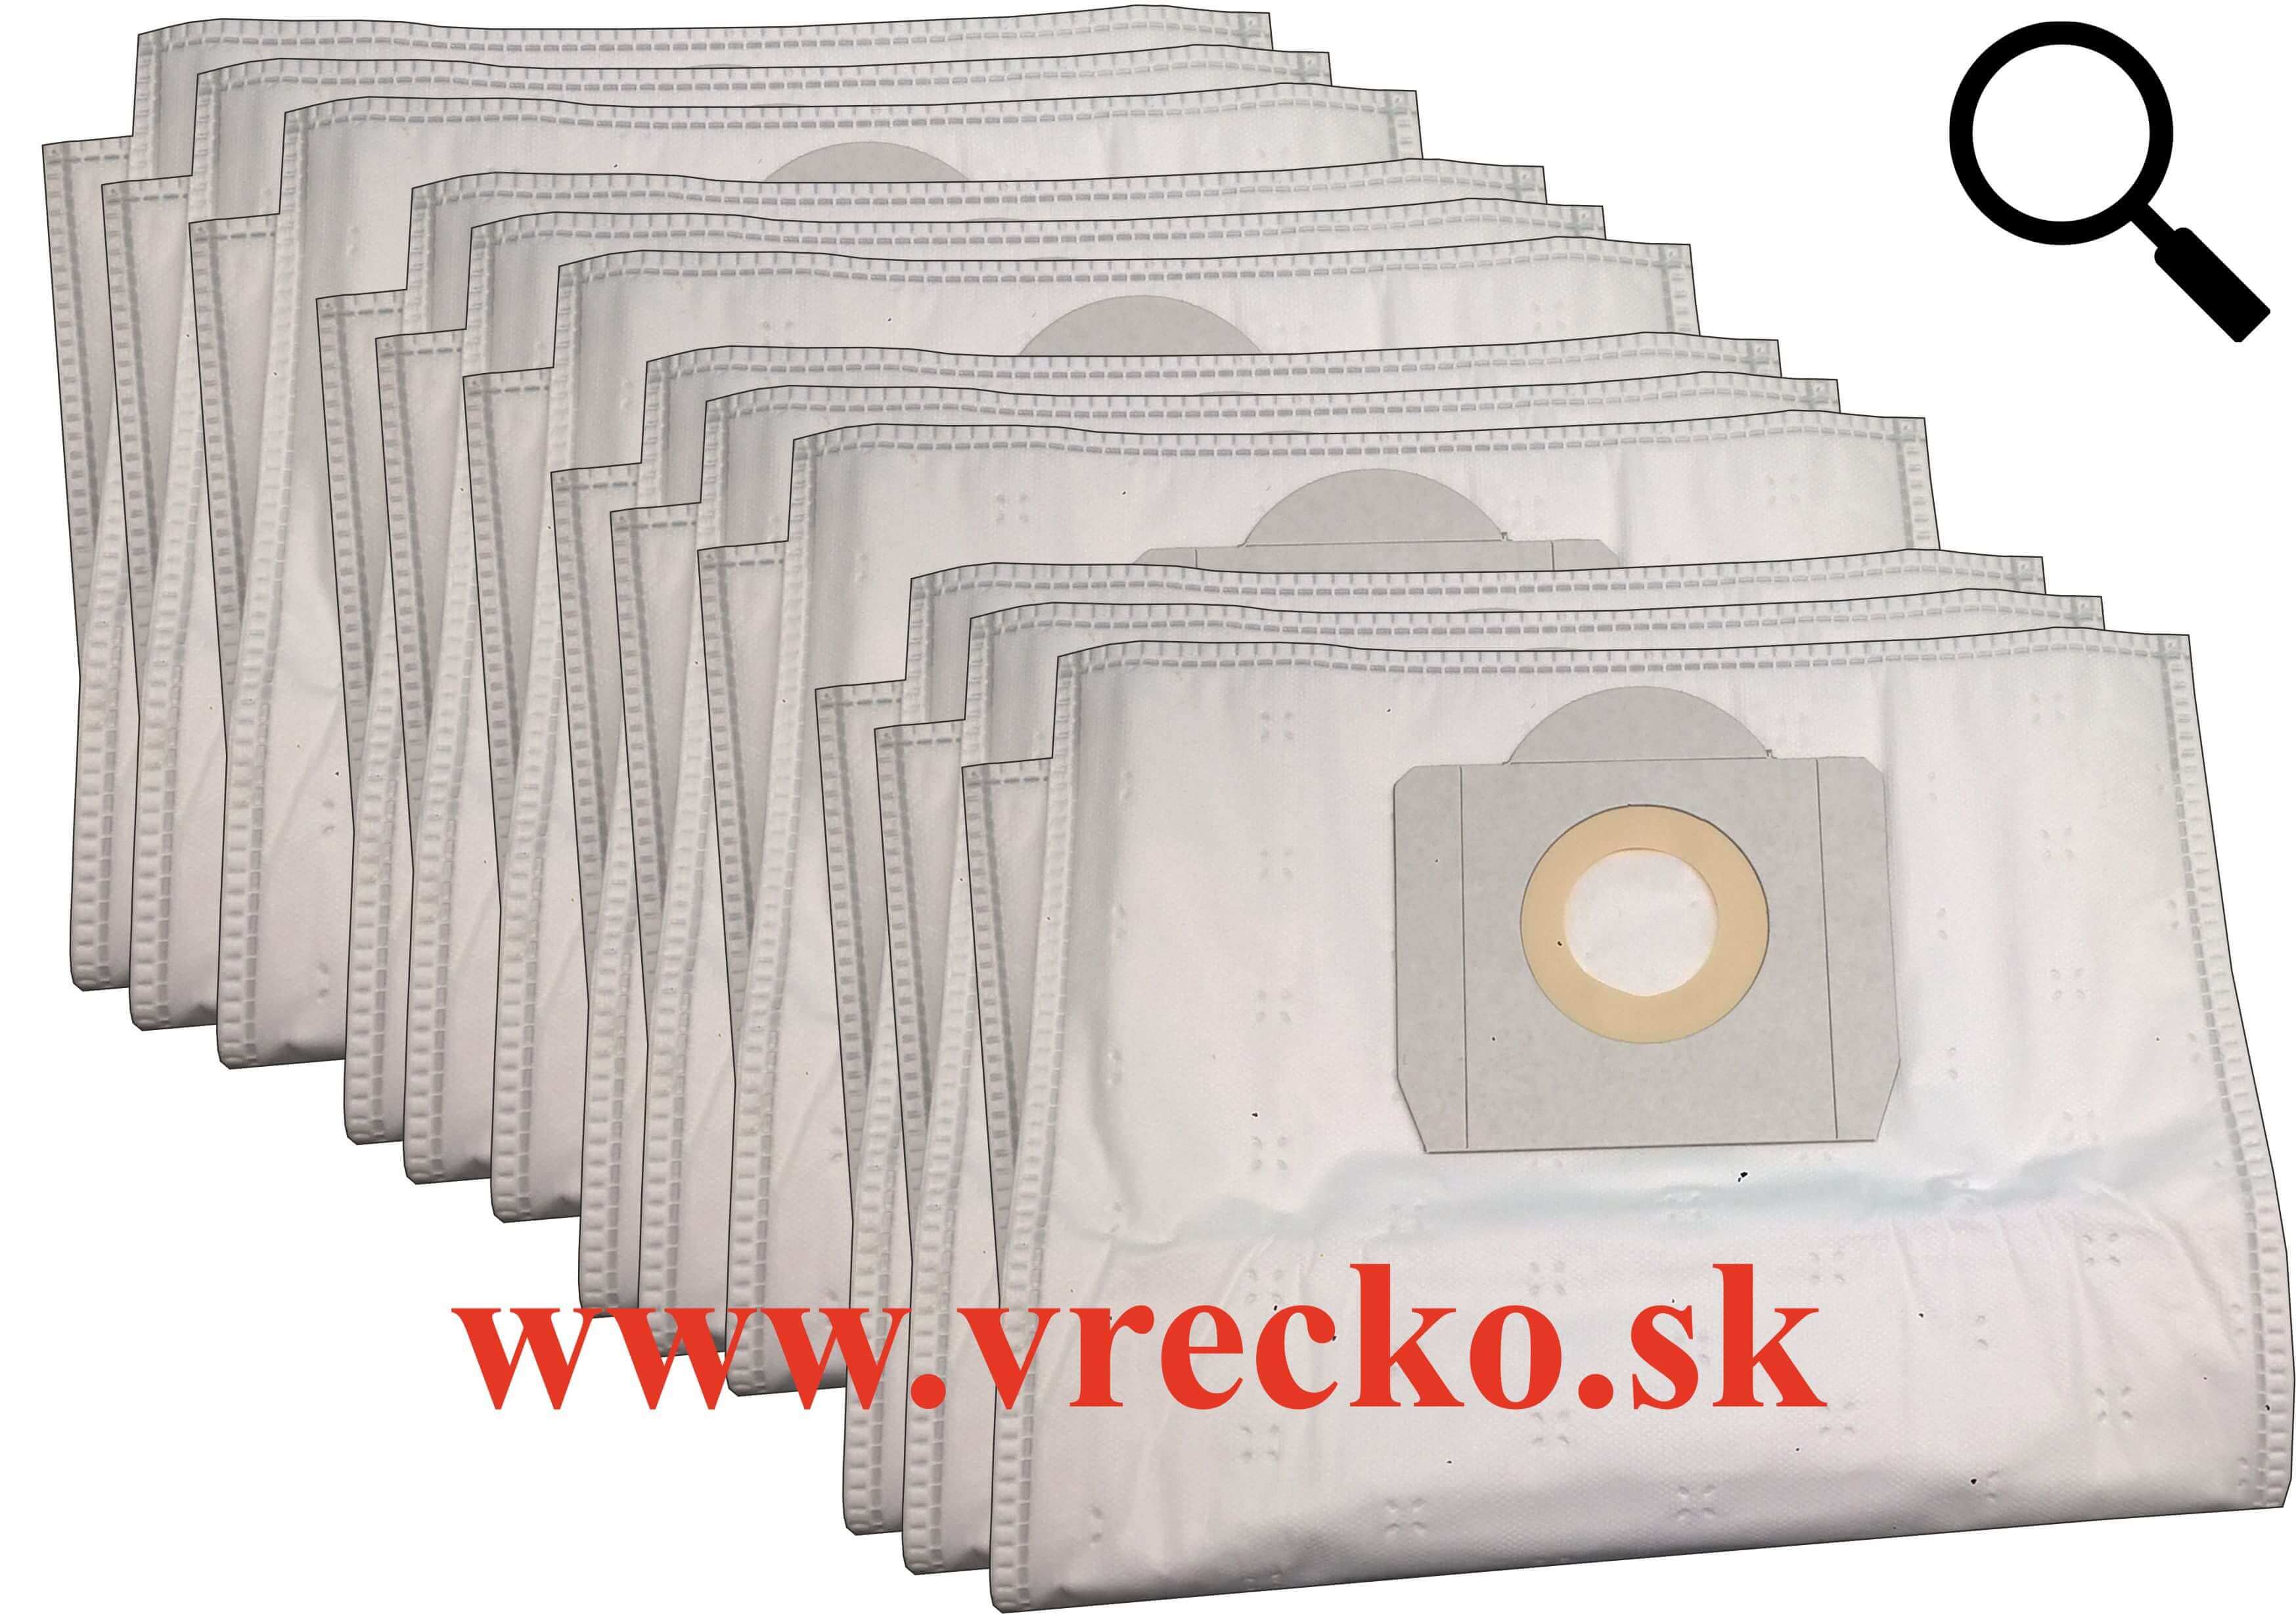 Eta 0404 - Textilné vrecká do vysávača XXL vo zvýhodnenom balení s dopravou zdarma (12ks)